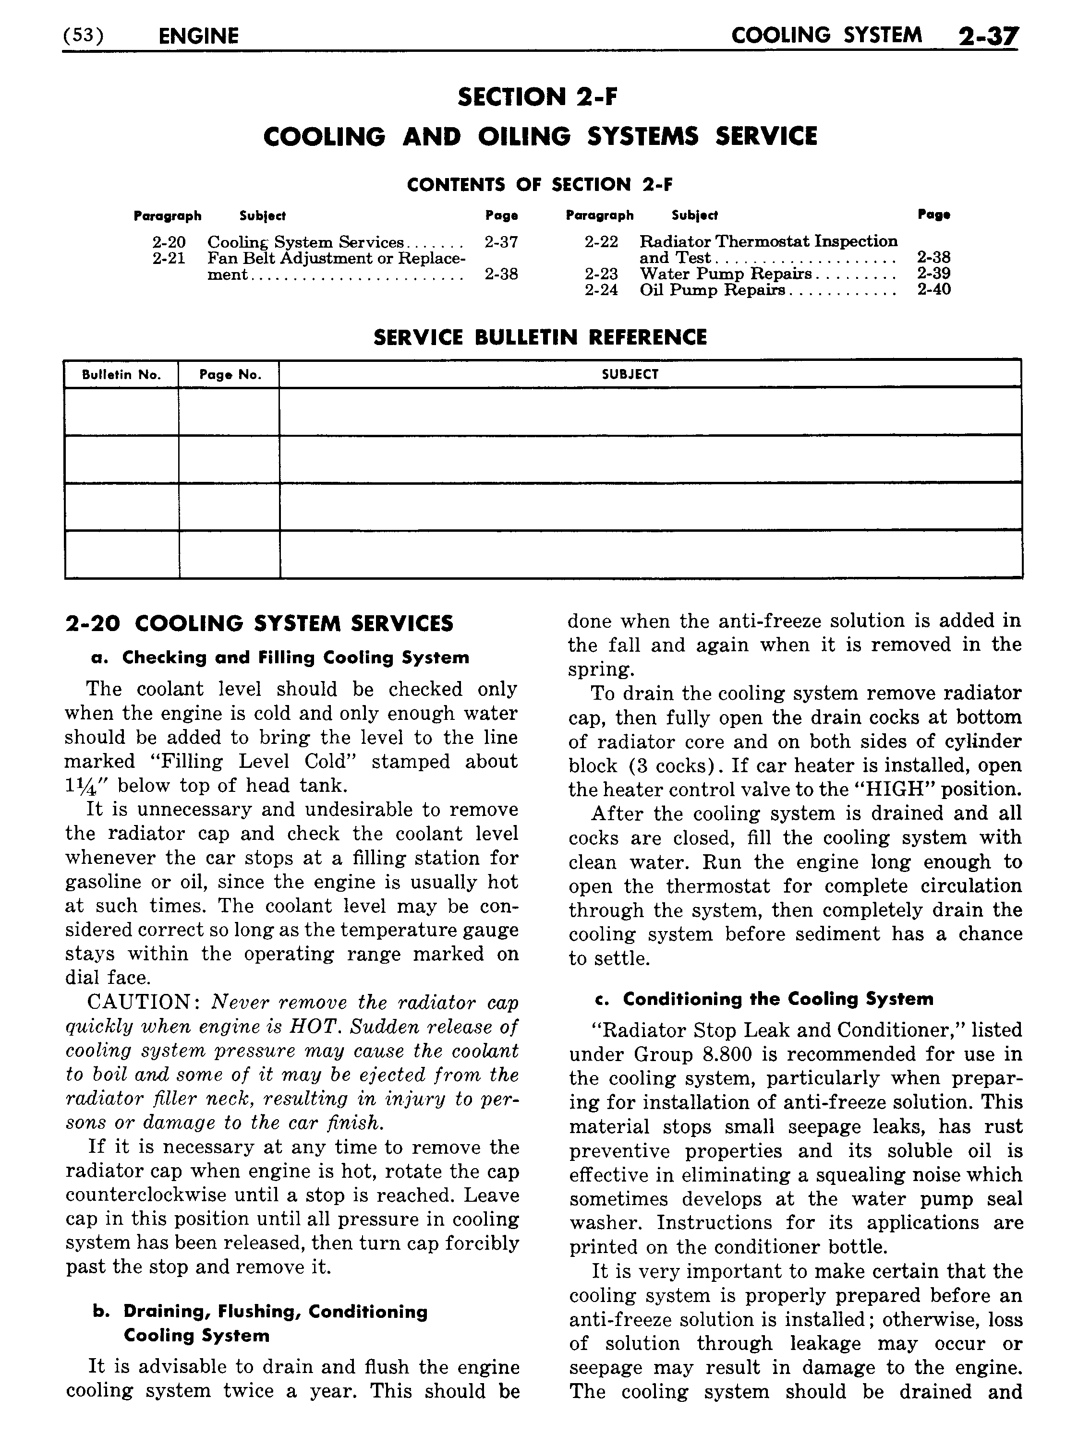 n_03 1955 Buick Shop Manual - Engine-037-037.jpg